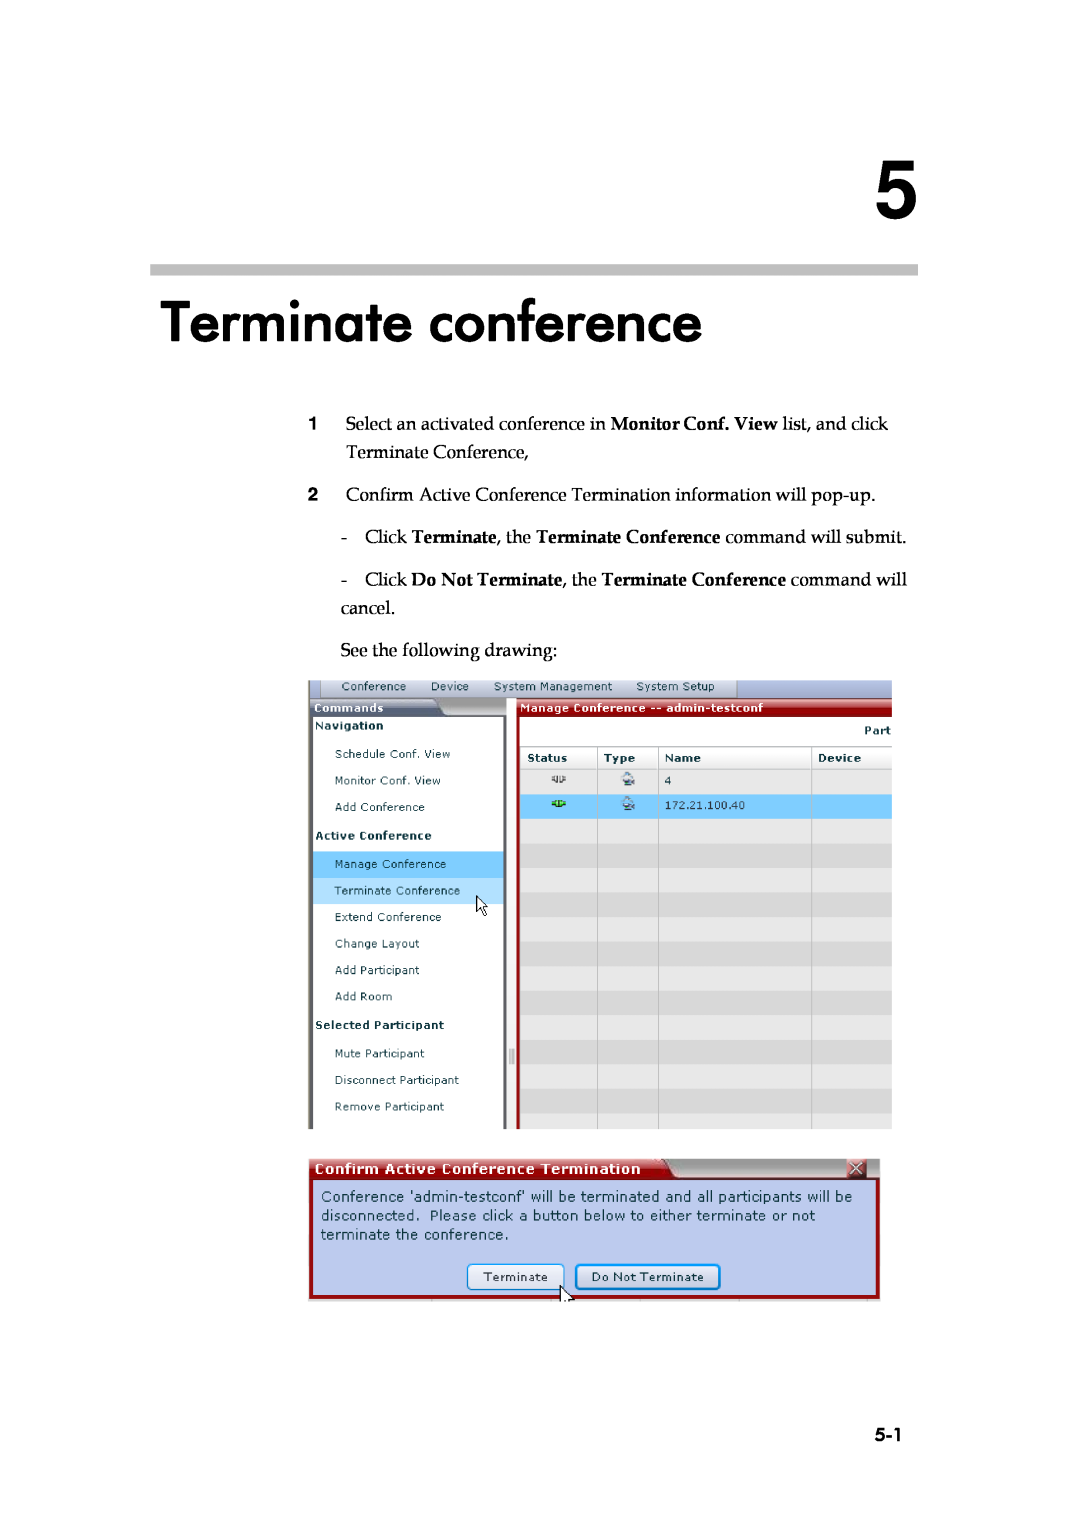 Polycom RMX 1000 V1.1.1 manual Terminate conference, Click Do Not Terminate, the Terminate Conference command will cancel 